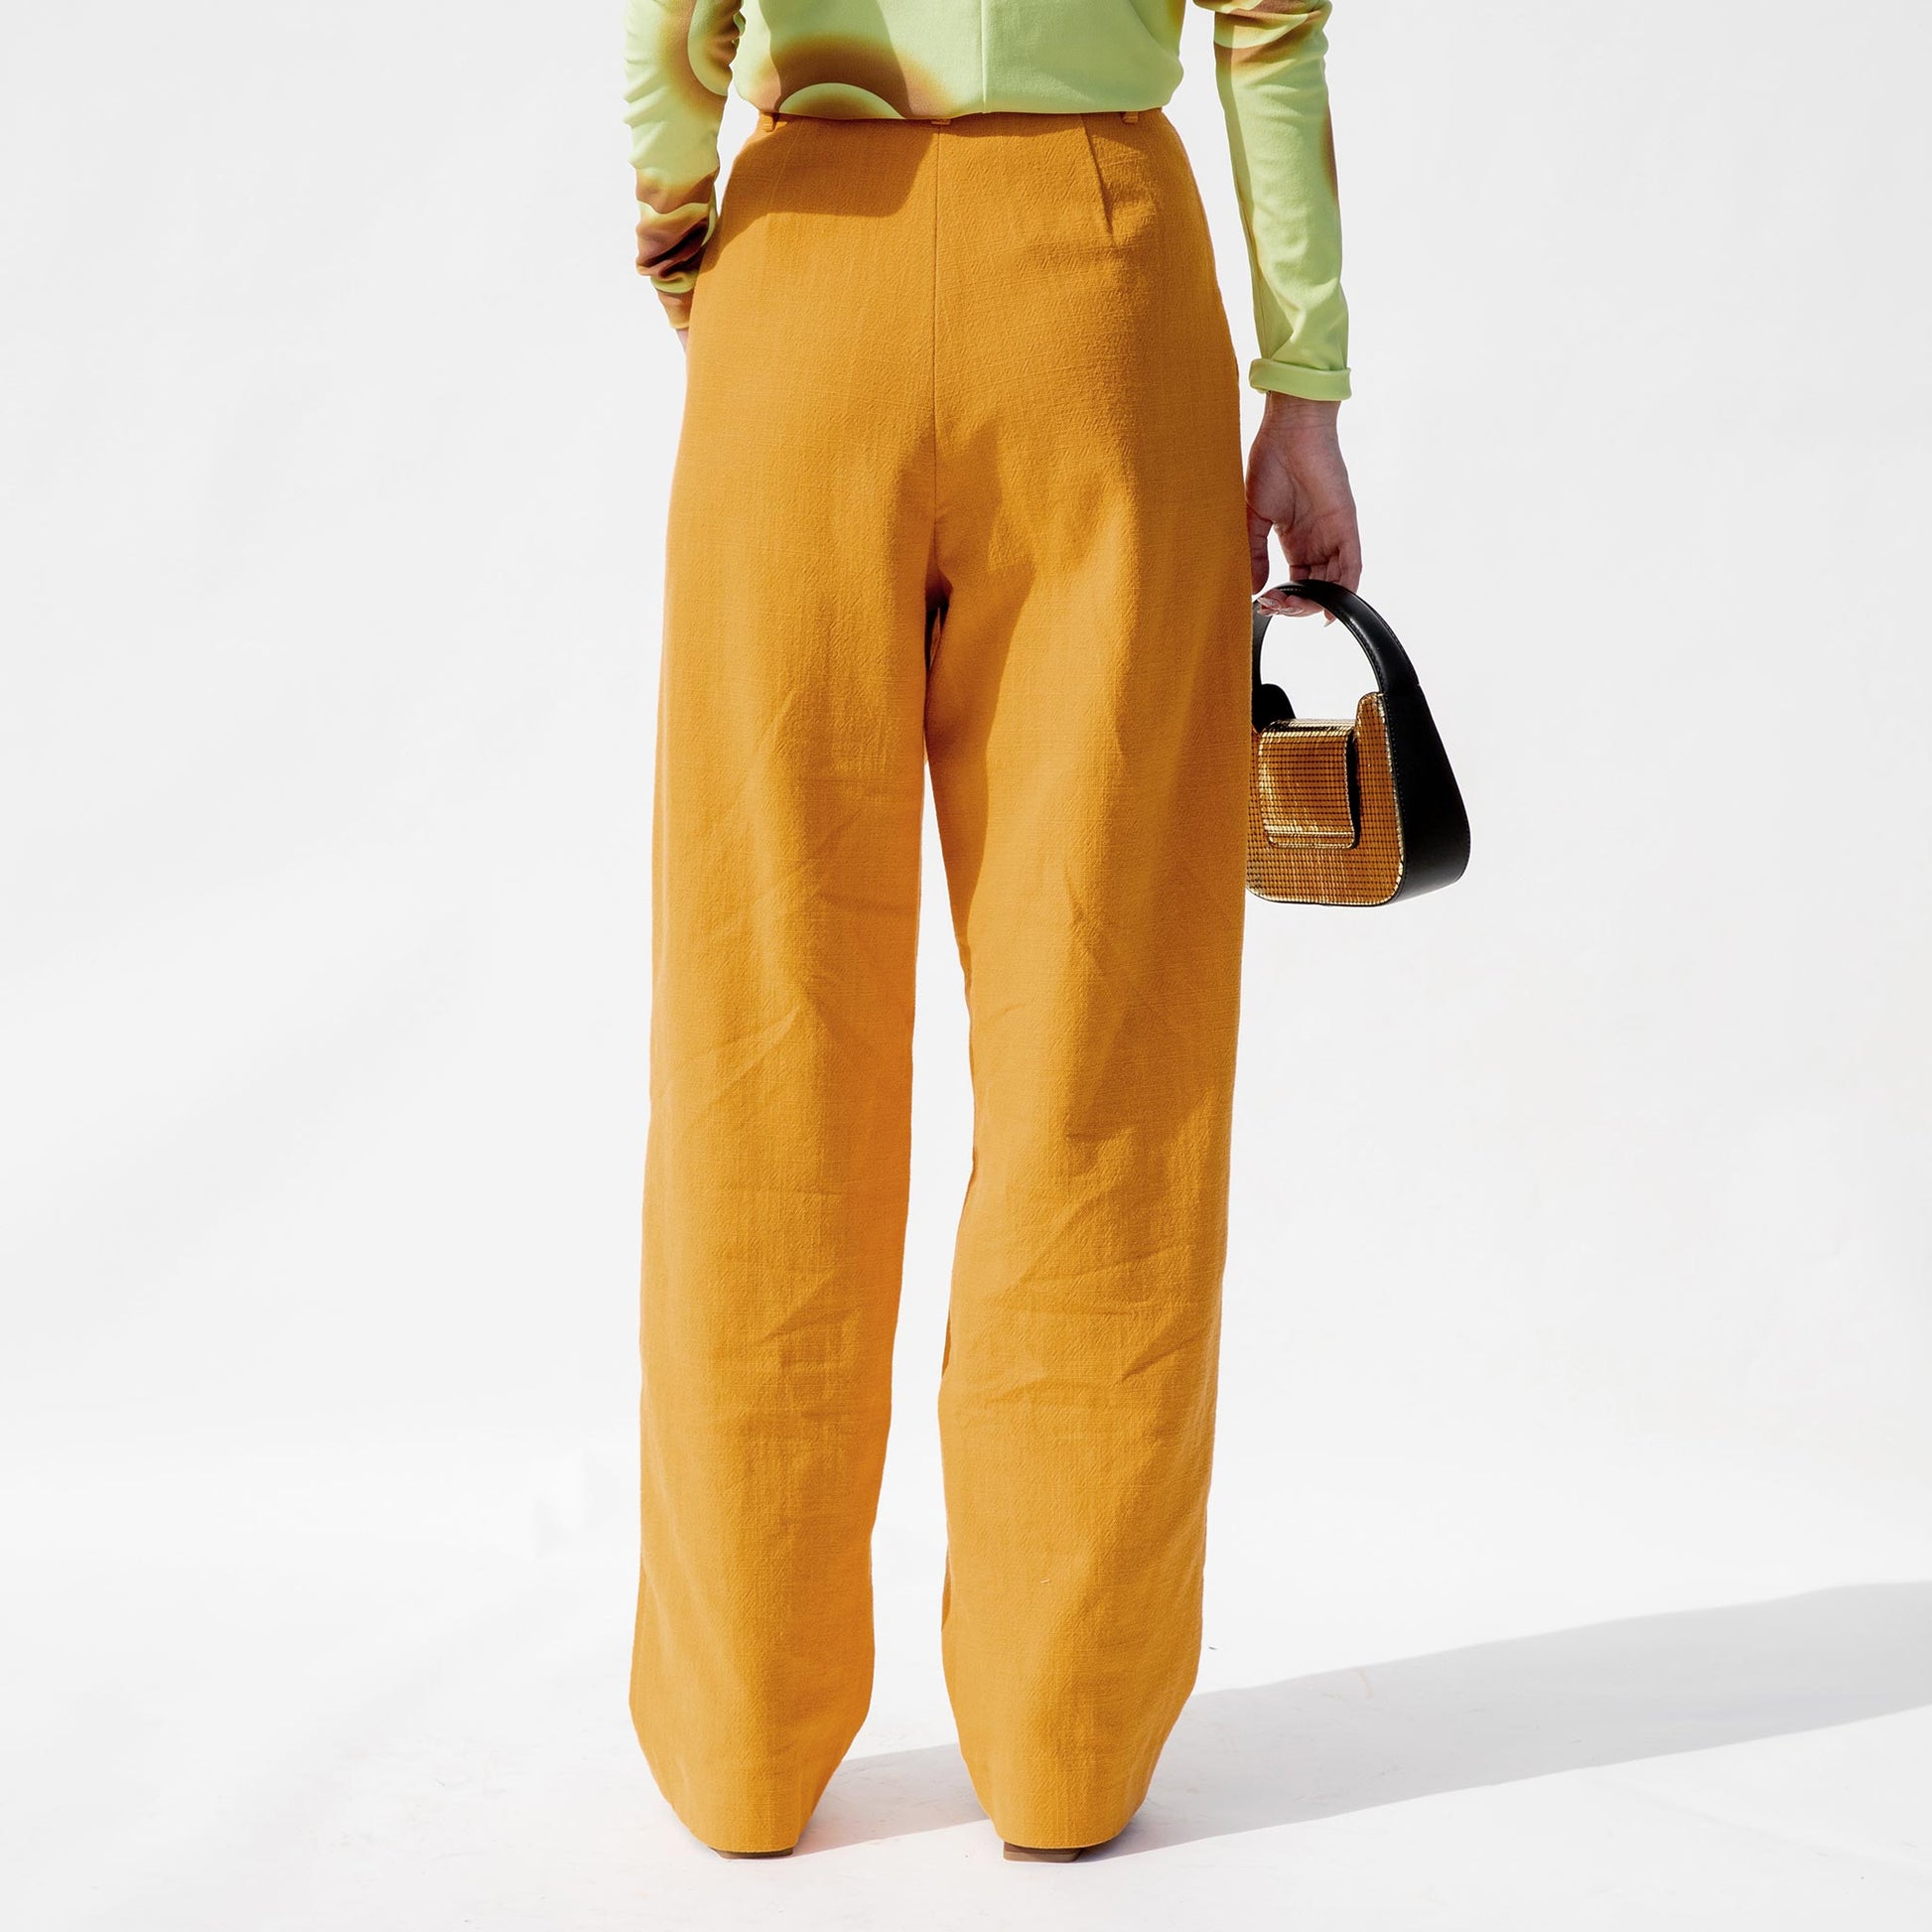 Back half body photo of model wearing the Marella Pant - Mustard.